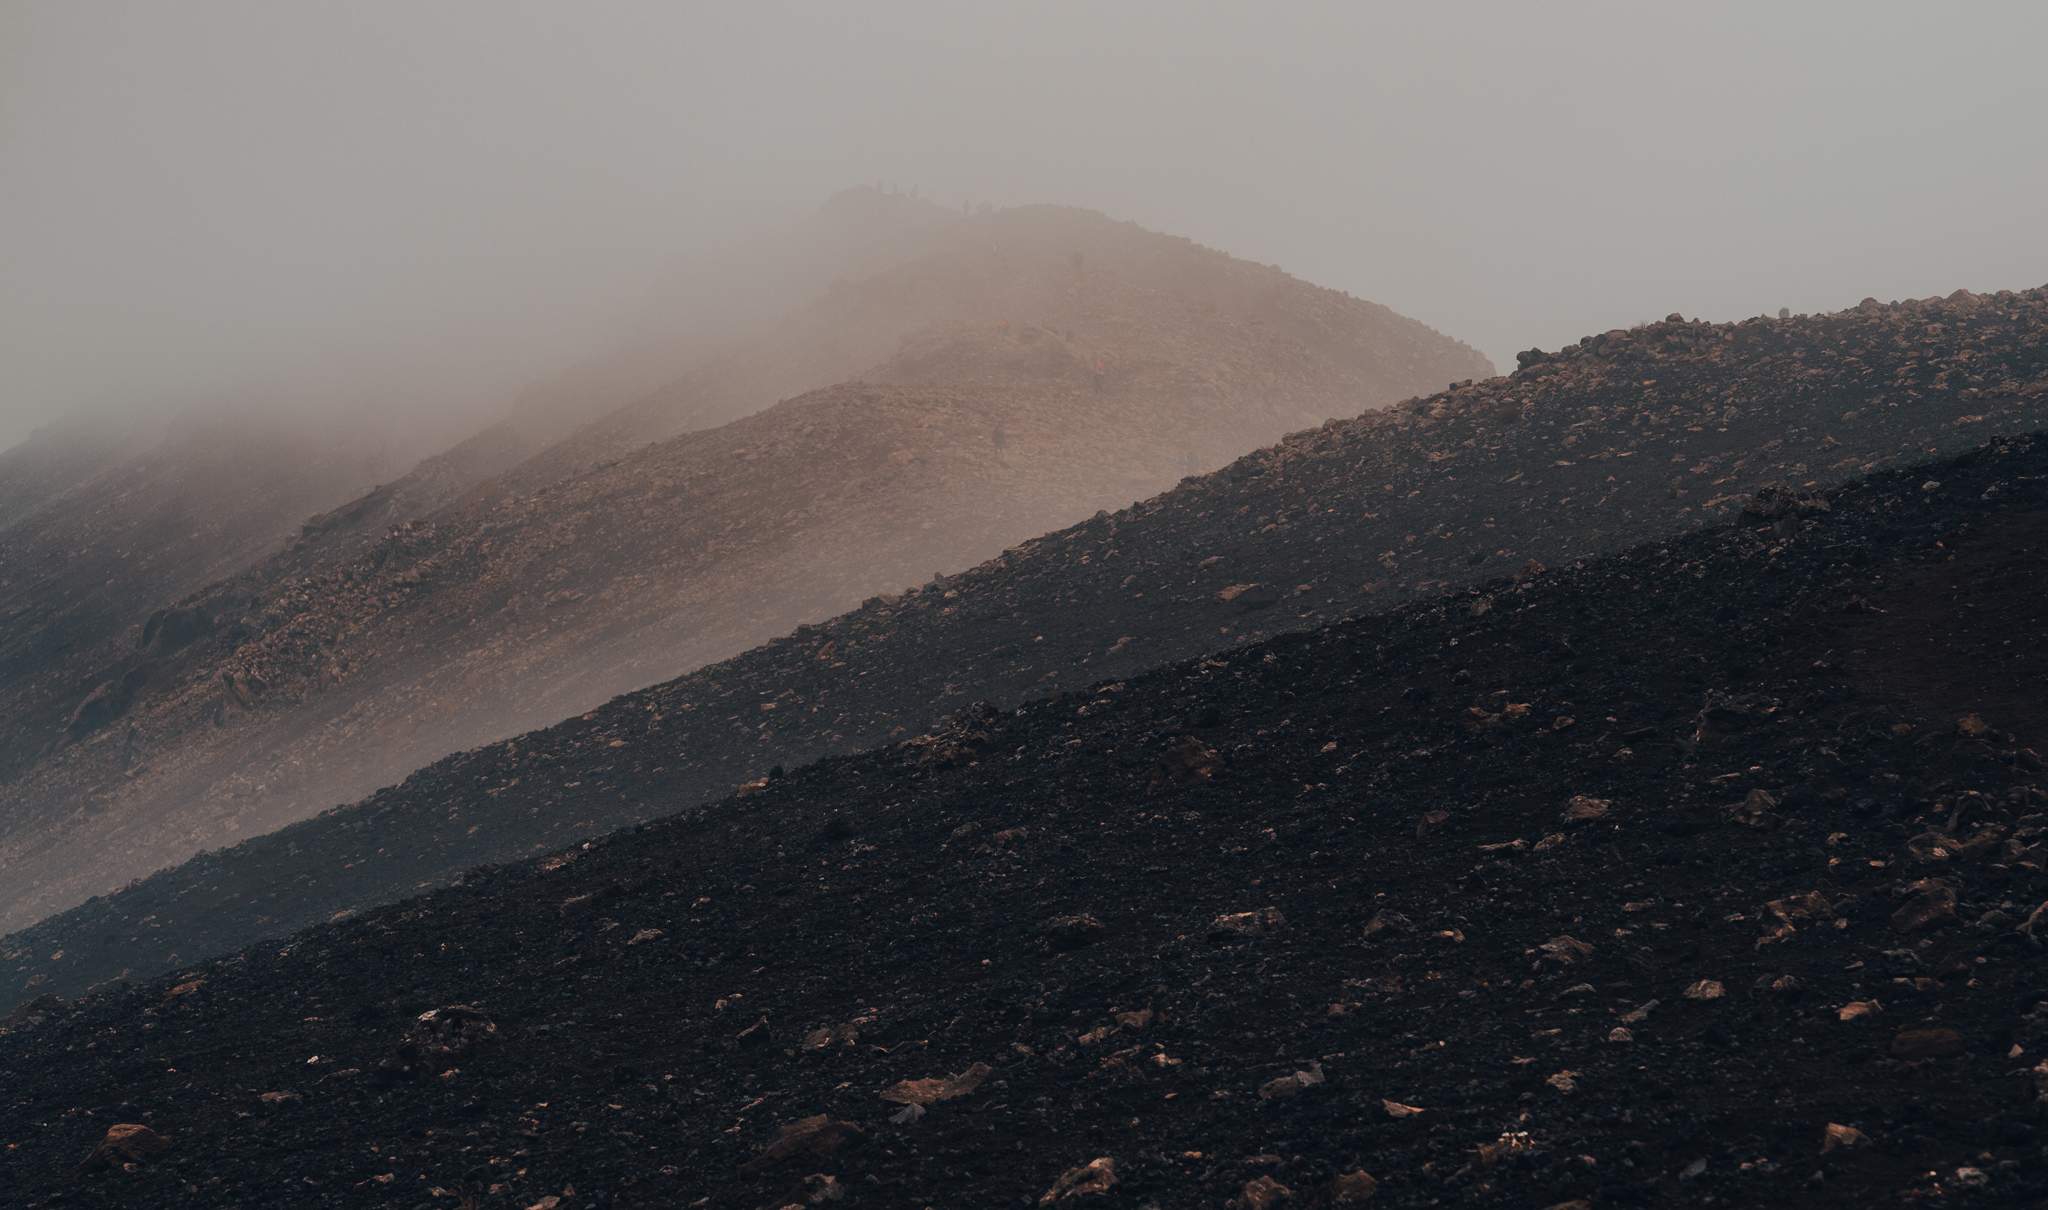 Fog covering the hills at at Fagradalsfjall volcano